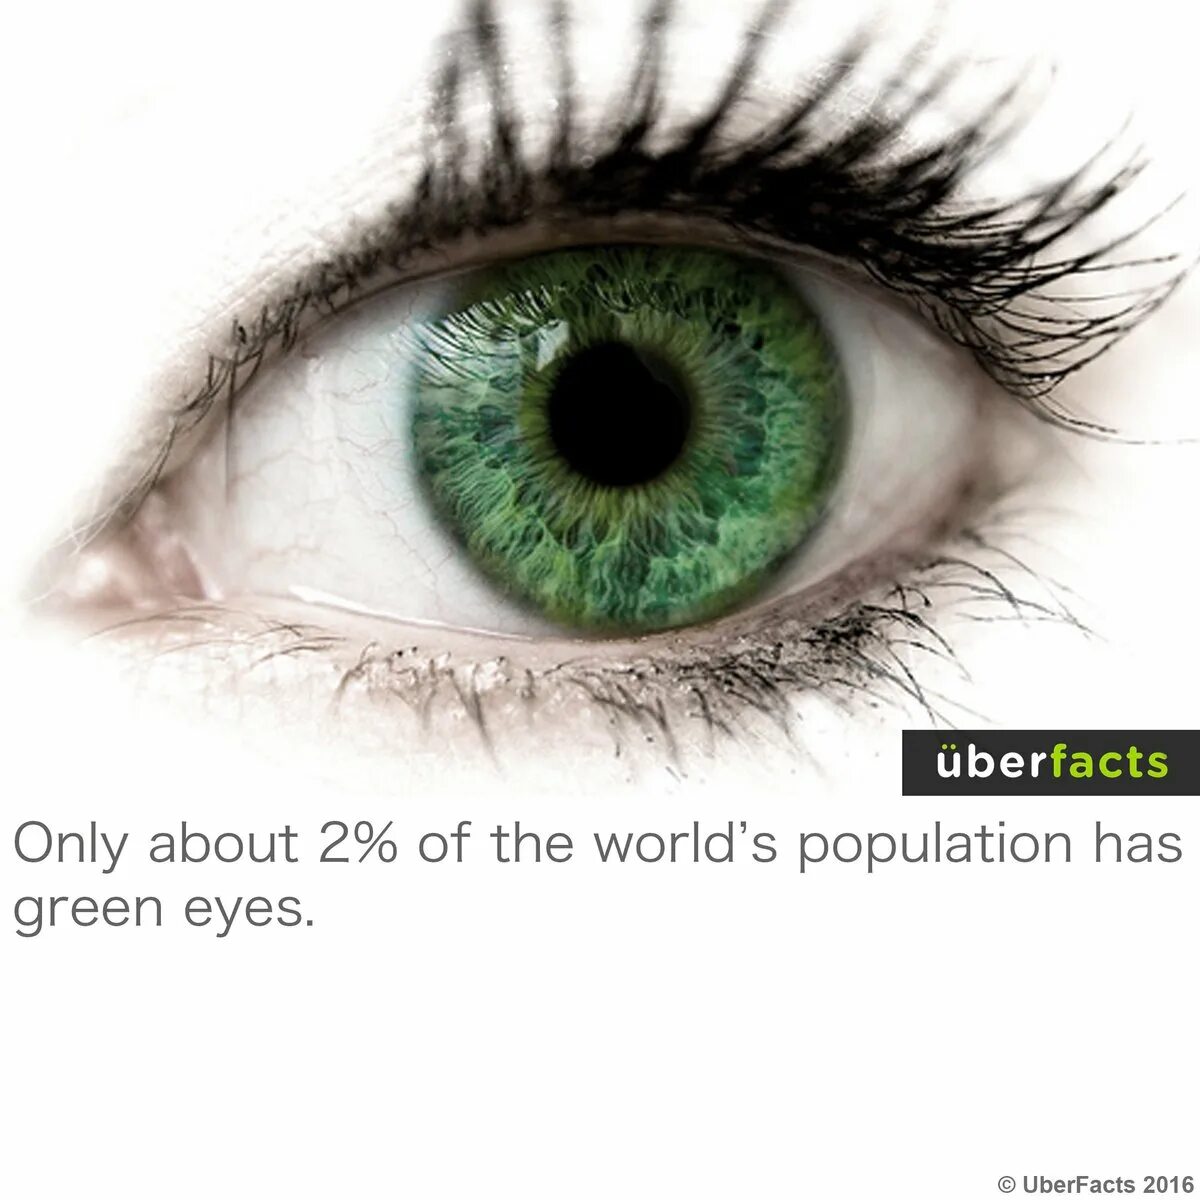 Зелёные глаза. Зеленый зрачок глаза. Зеленые глаза на солнце. Зелёный цвет глаз самый редкий. He got green eyes